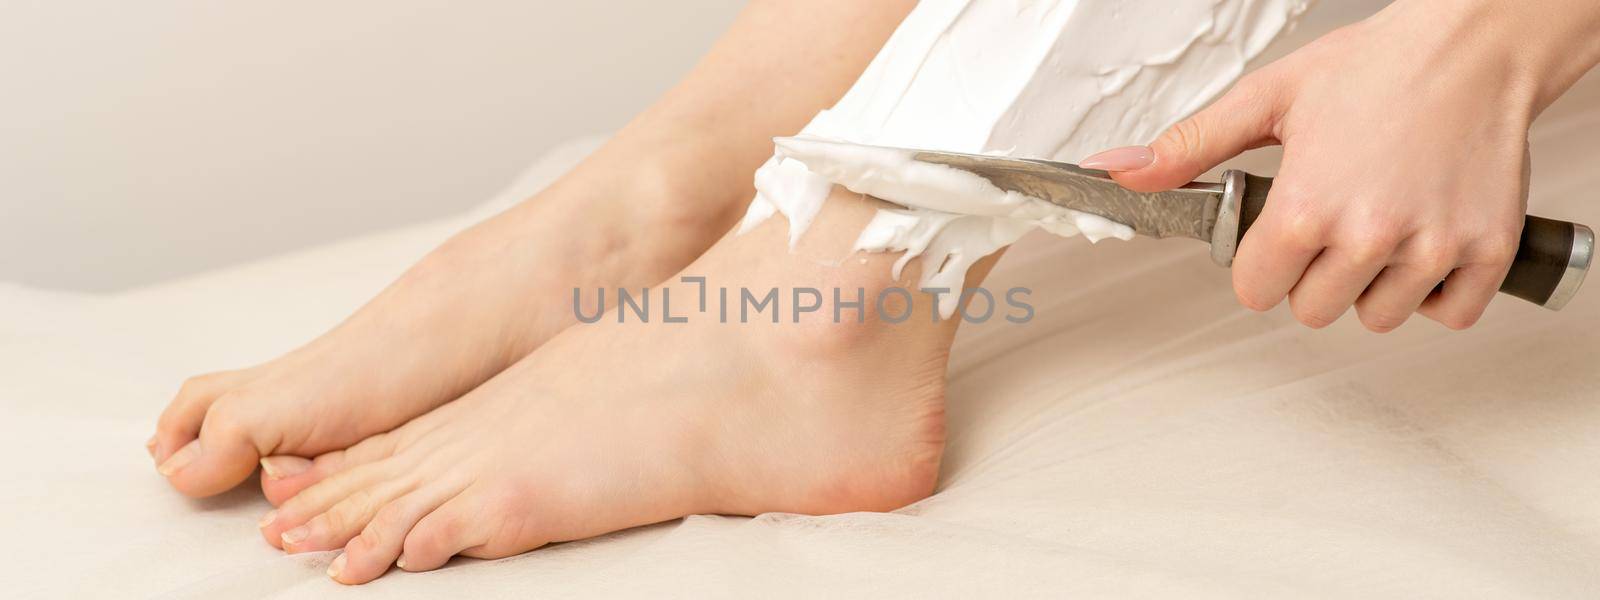 Woman shaving legs with knife by okskukuruza